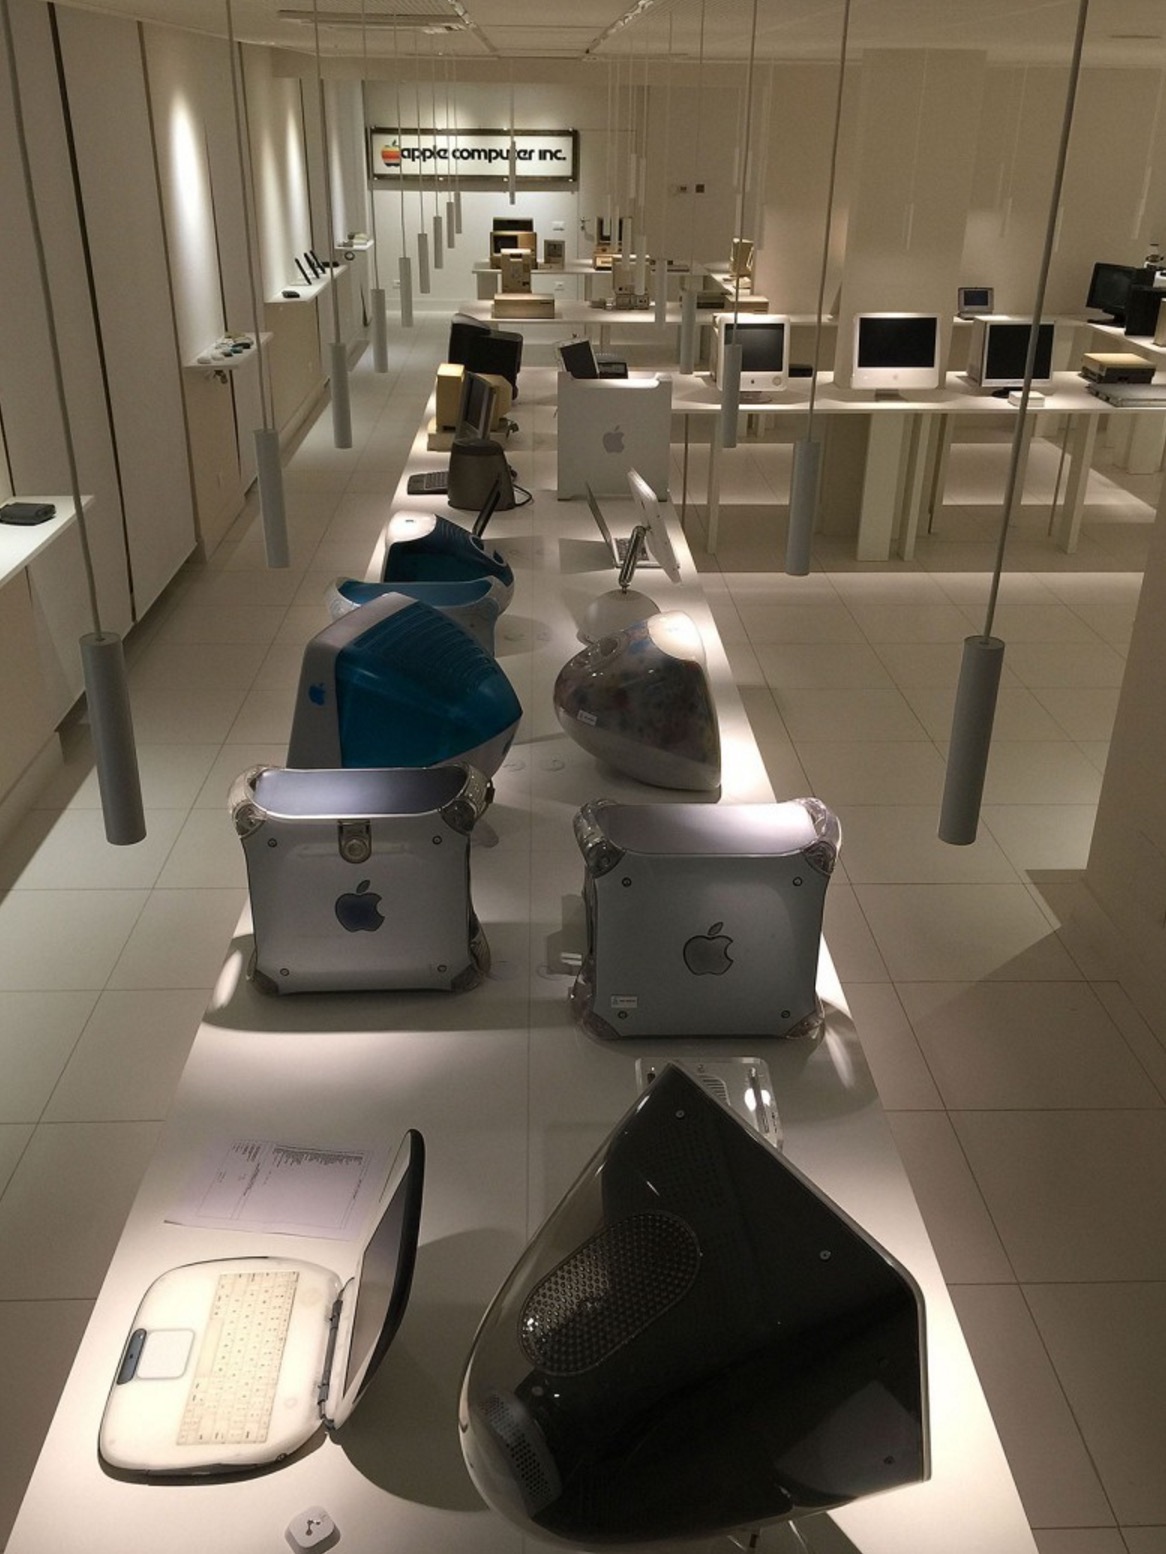 museo-apple-in-italia-savona